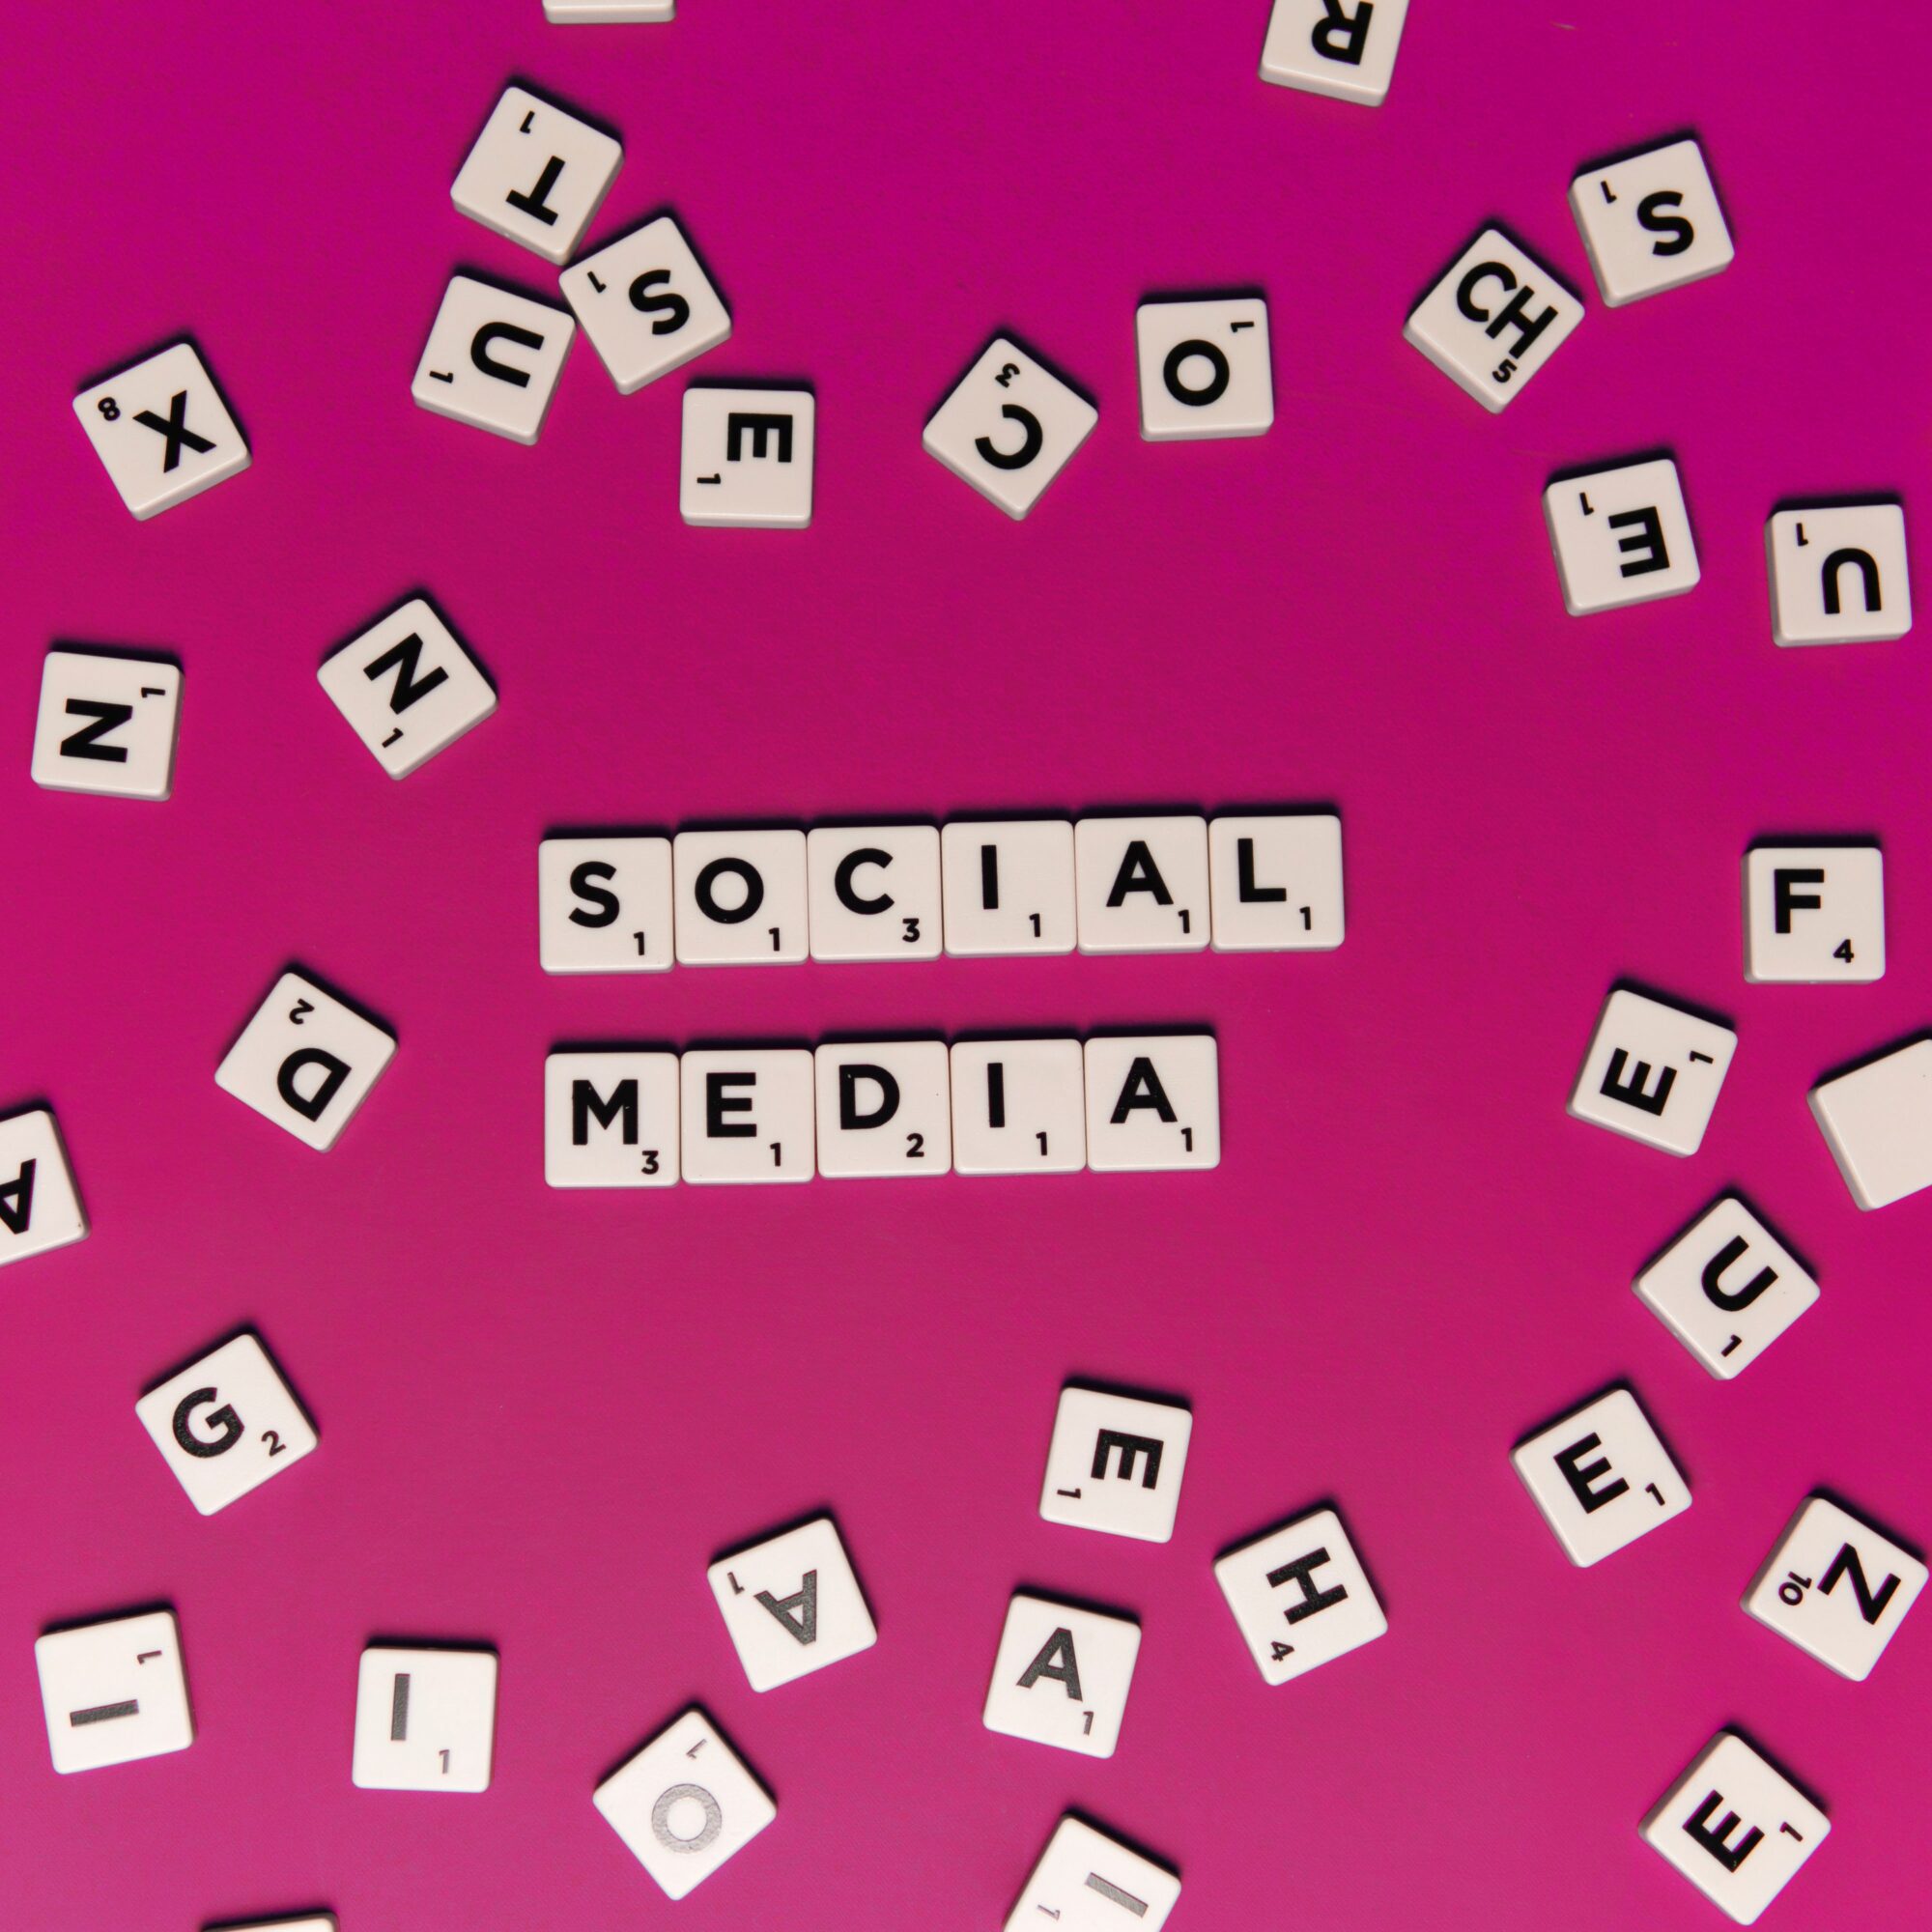 Foto: Wort «SOCIAL MEDIA», gebildet aus Scrabble-Buchstaben